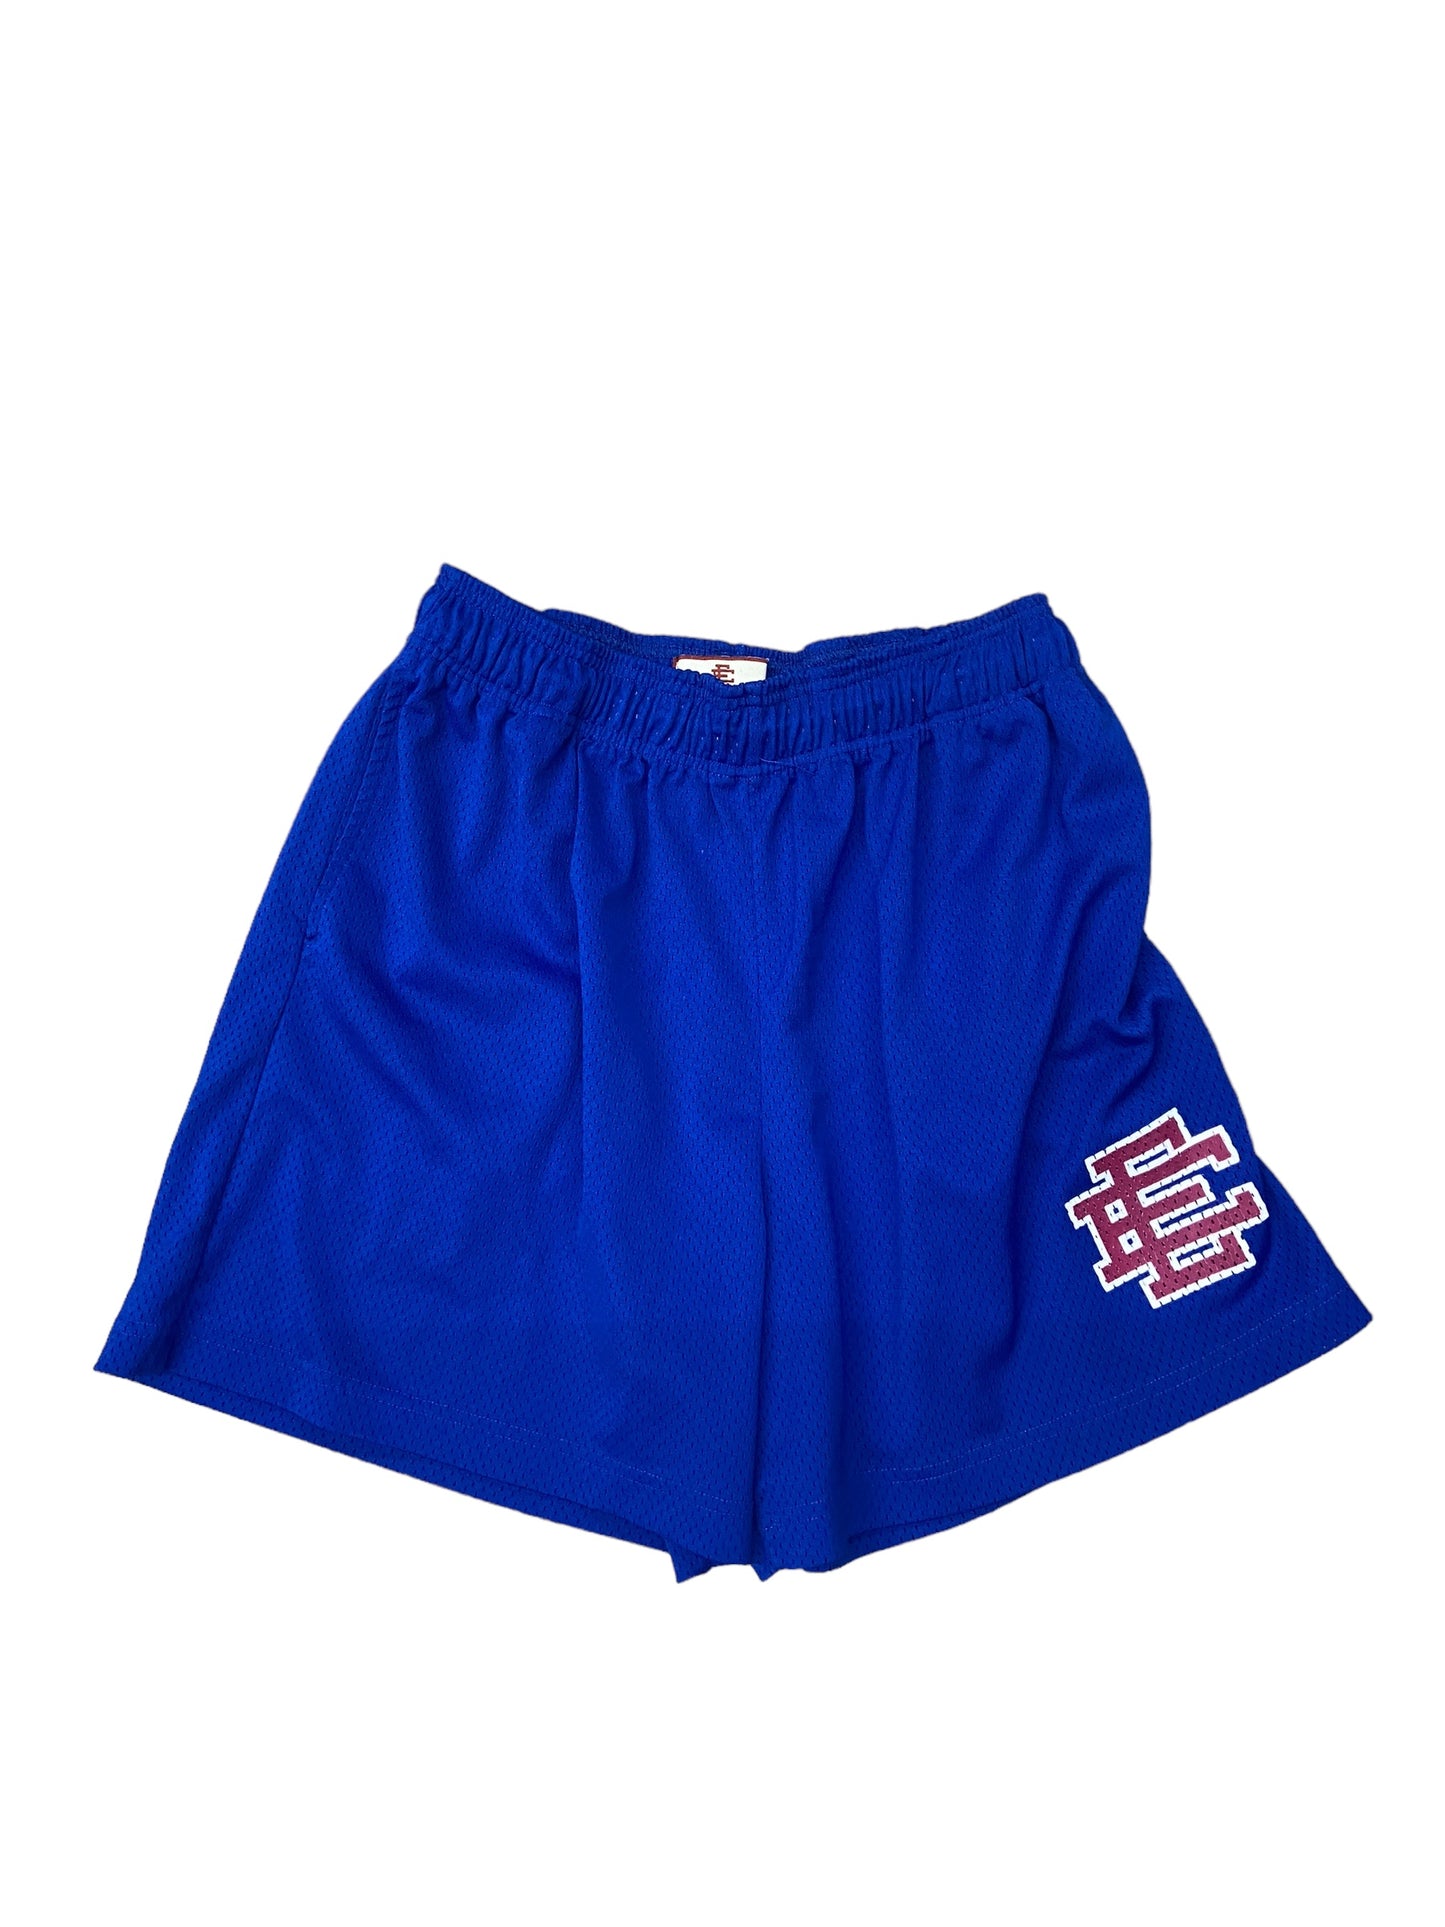 Preowned Eric Emanuel Blue Shorts Sz XL